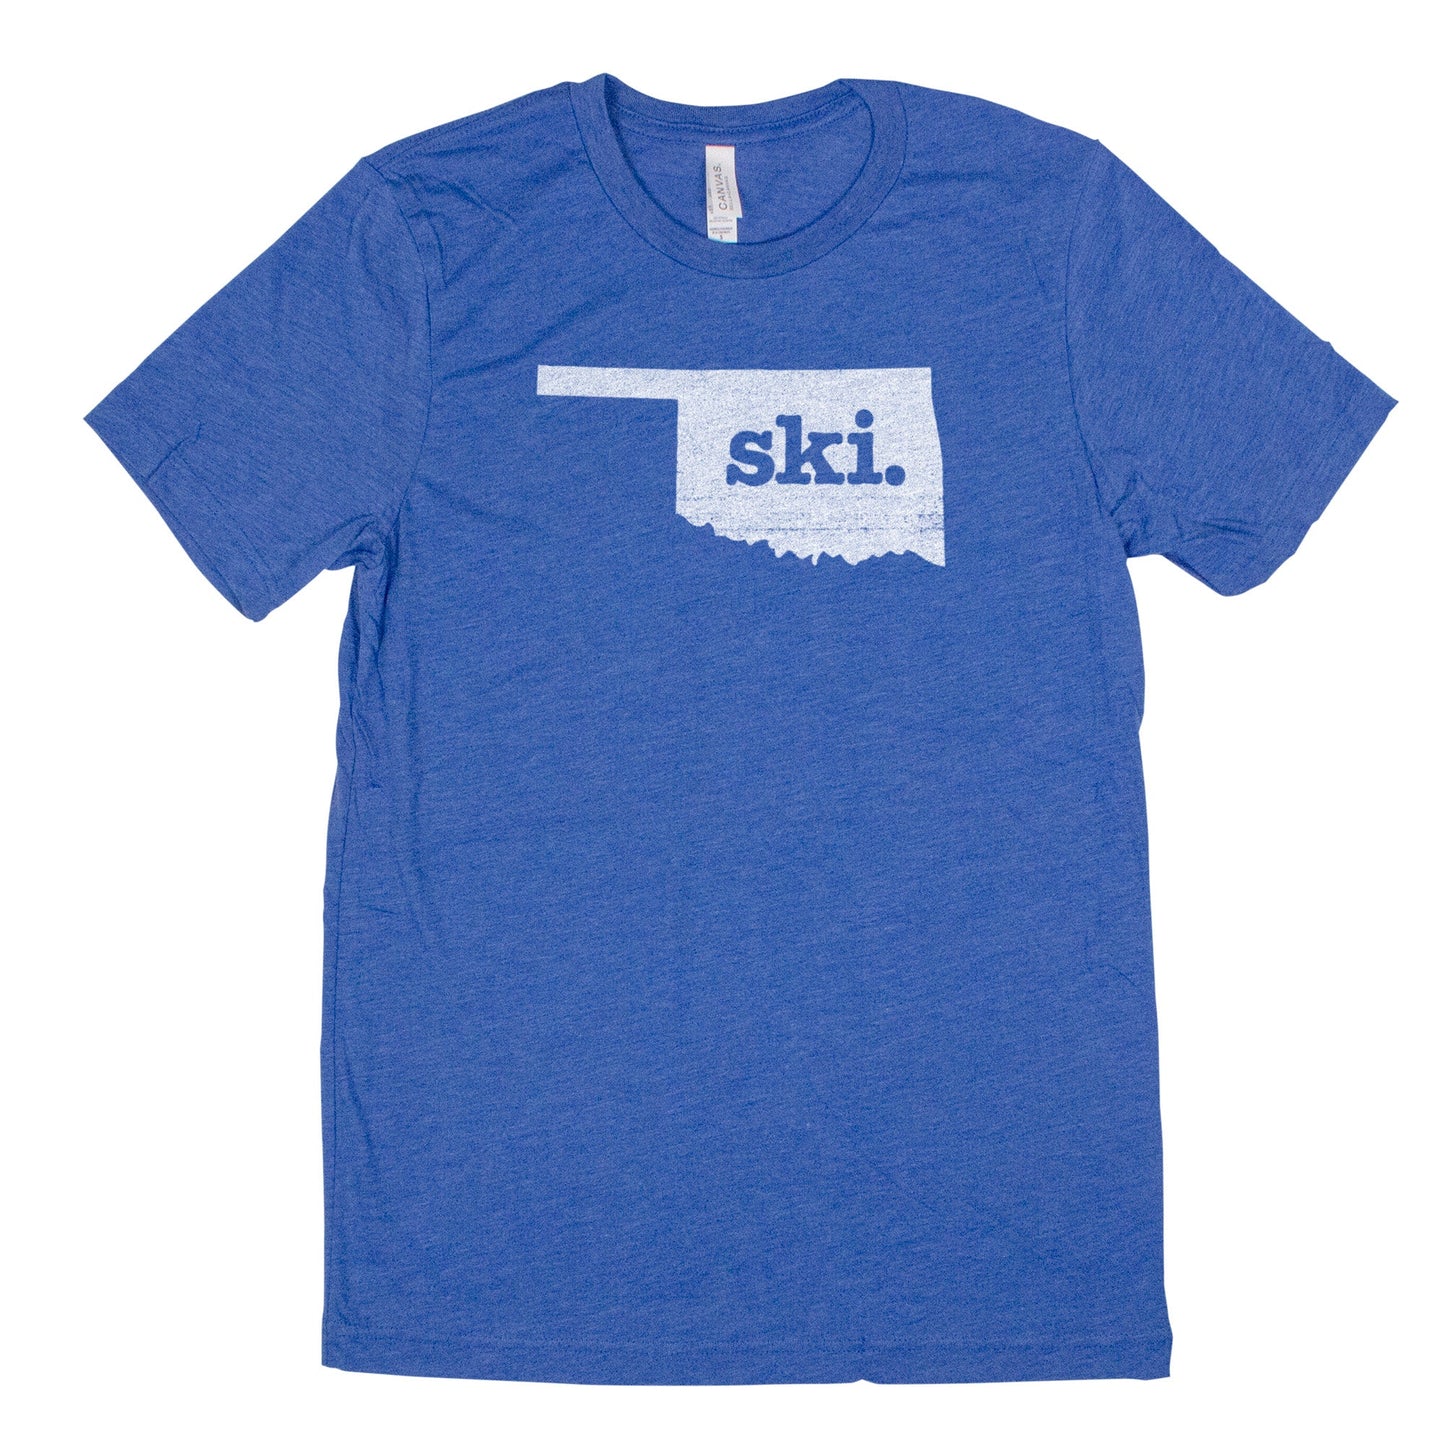 ski. Men's Unisex T-Shirt - Oklahoma